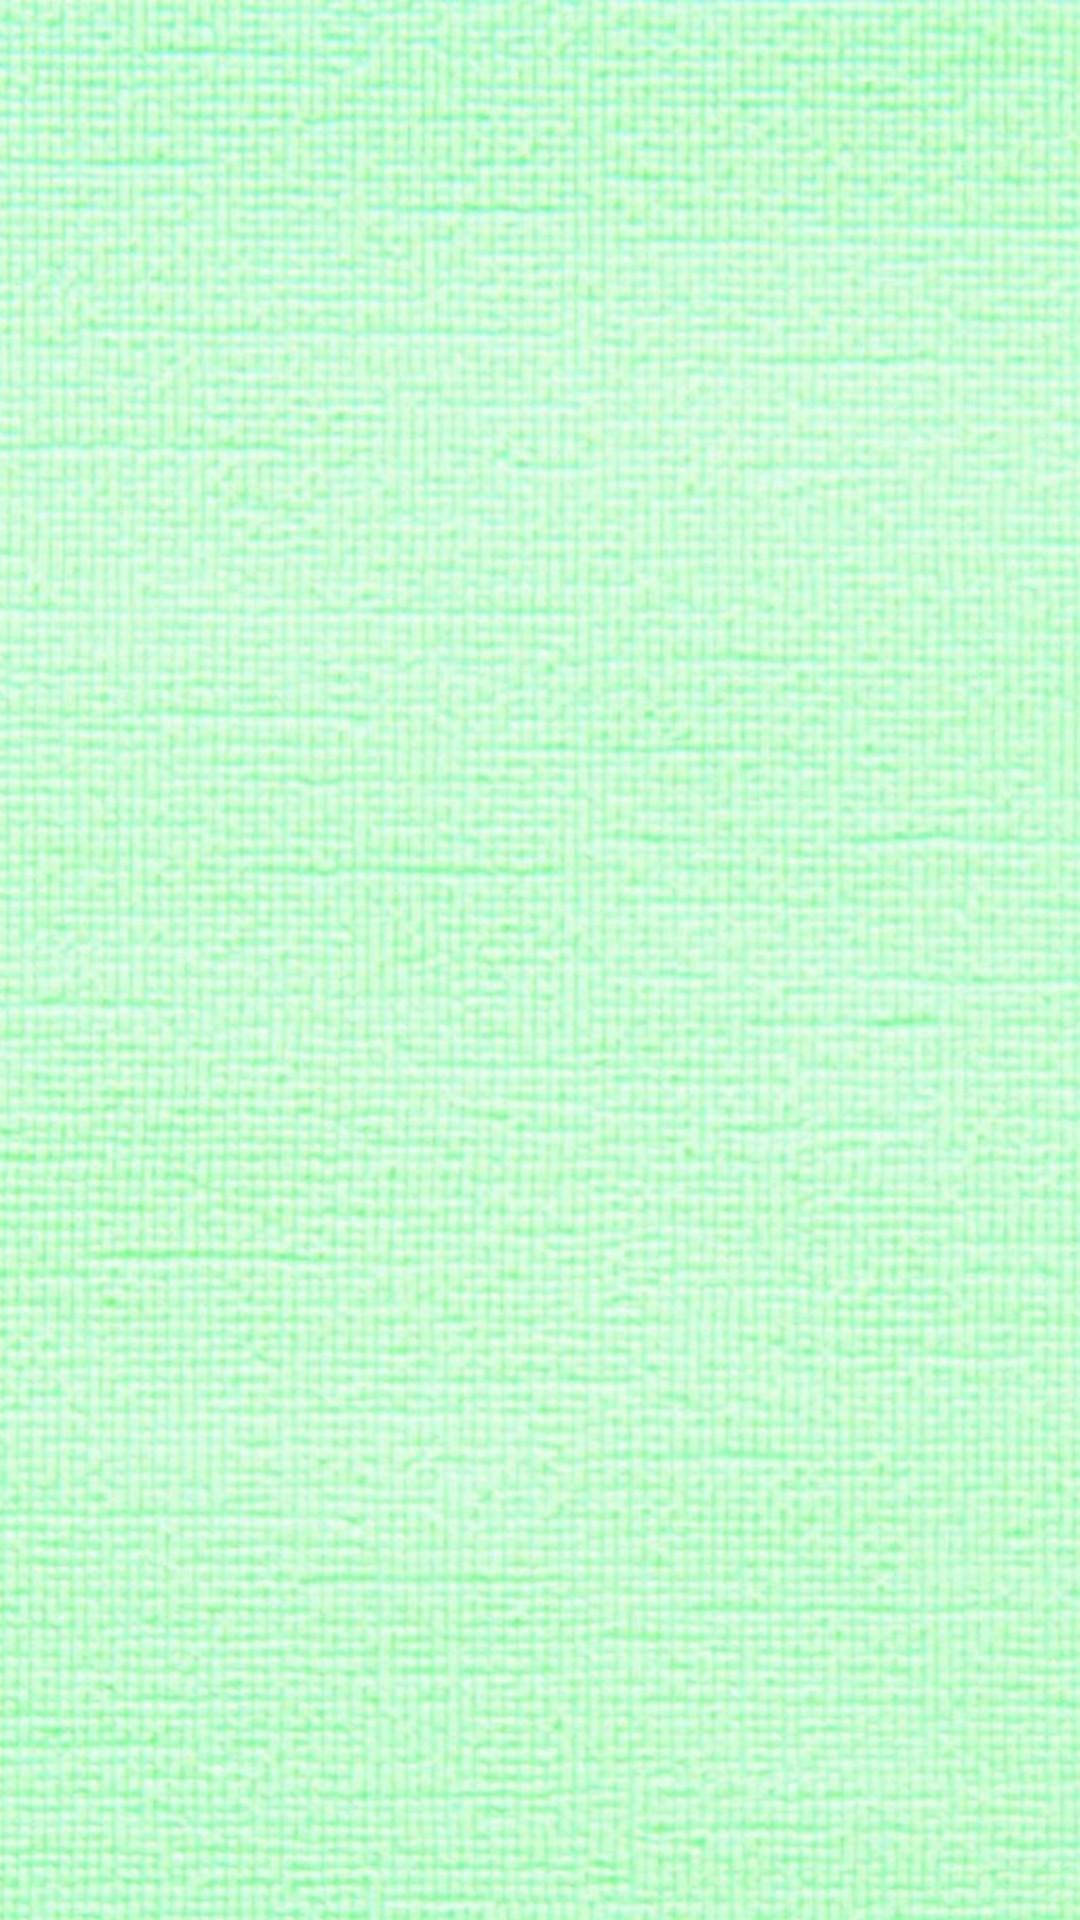 Canvas Fabric Texture Mint Green Iphone Wallpaper